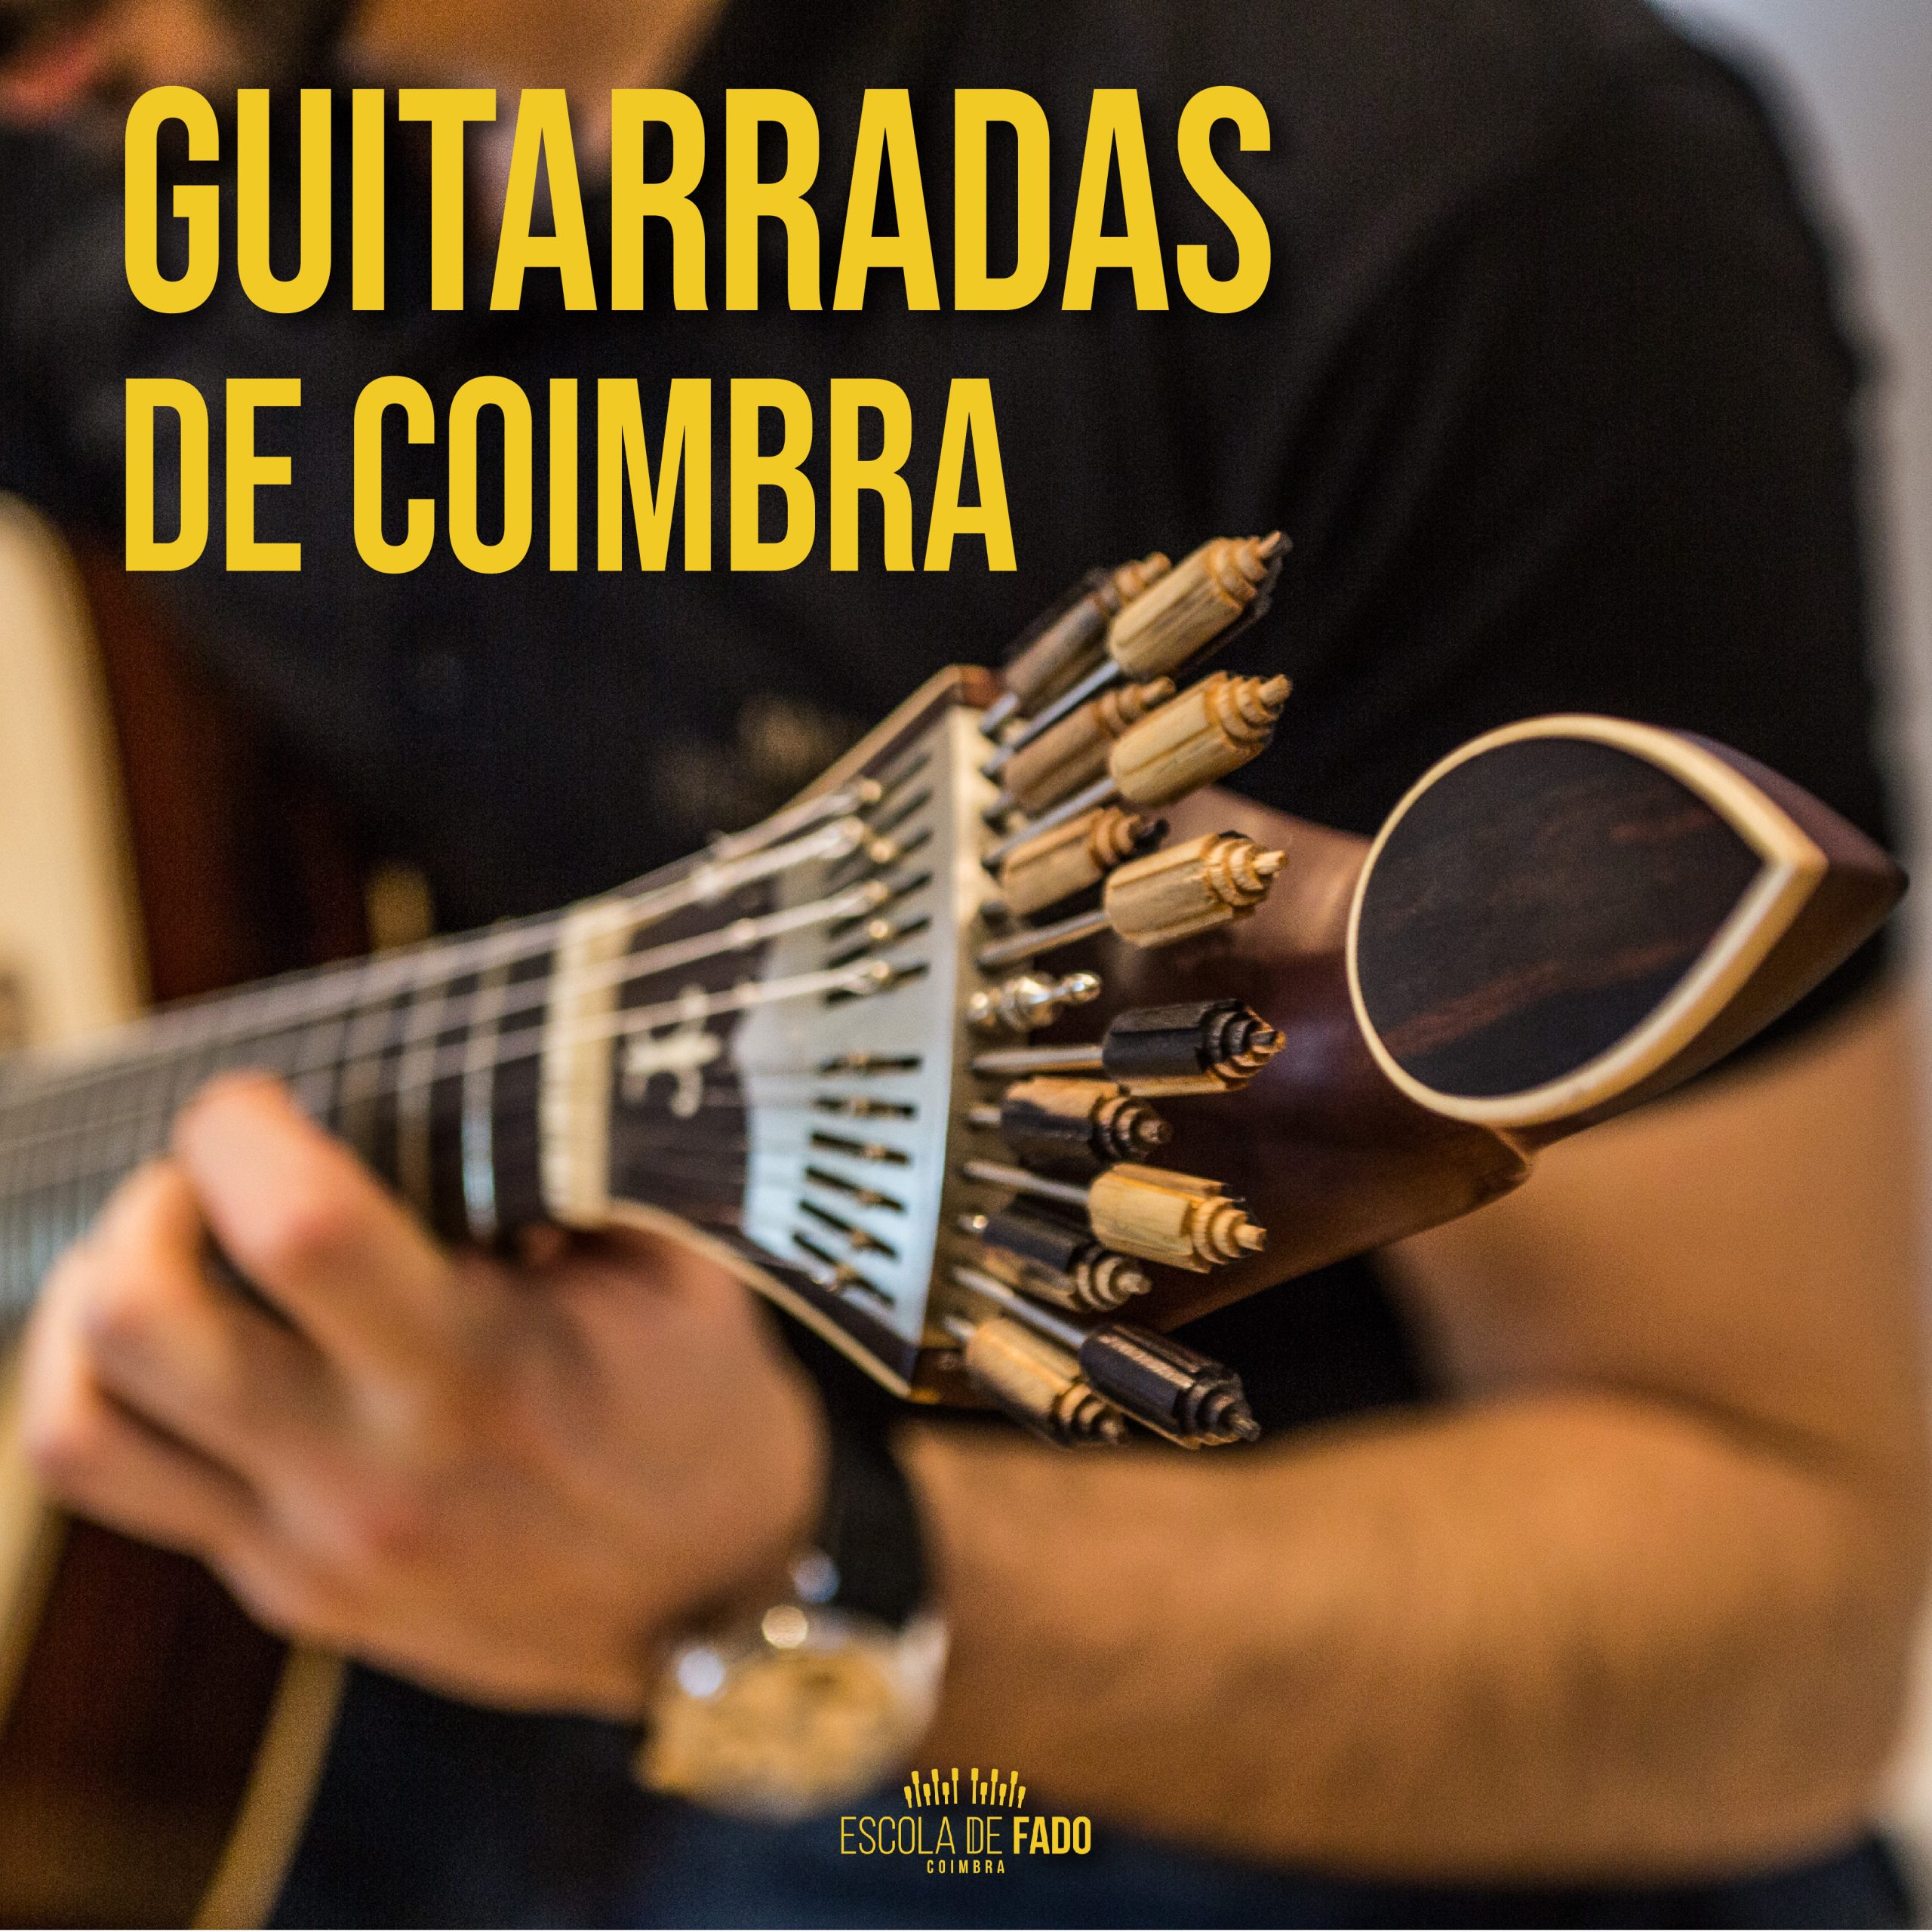 MINI_Guitarradas